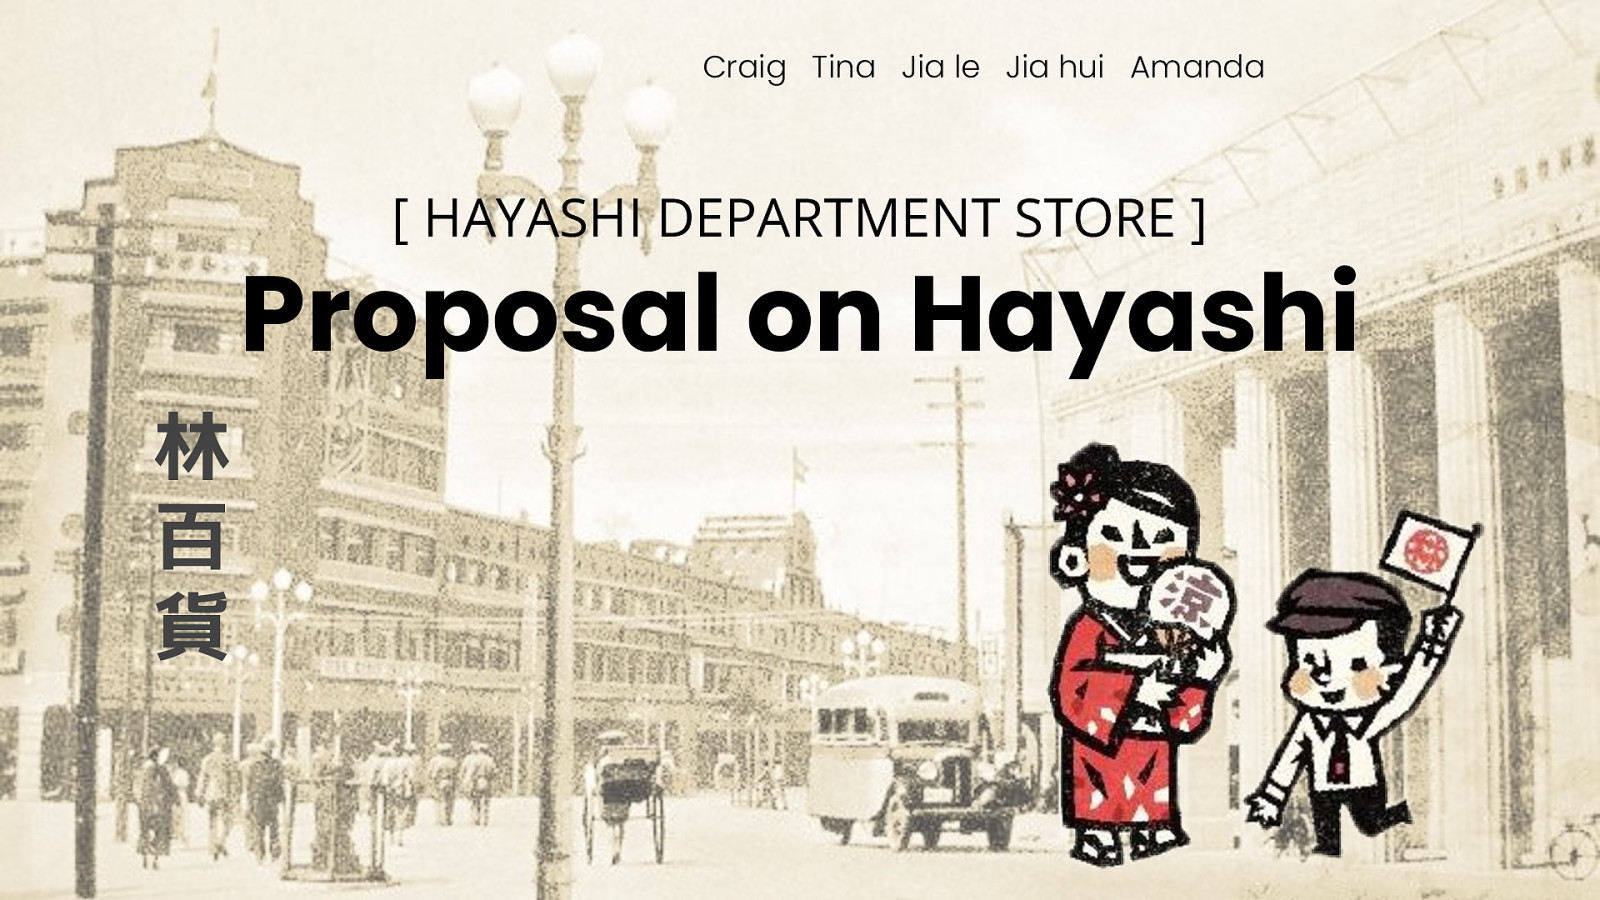 Proposal on Hayashi Department Store